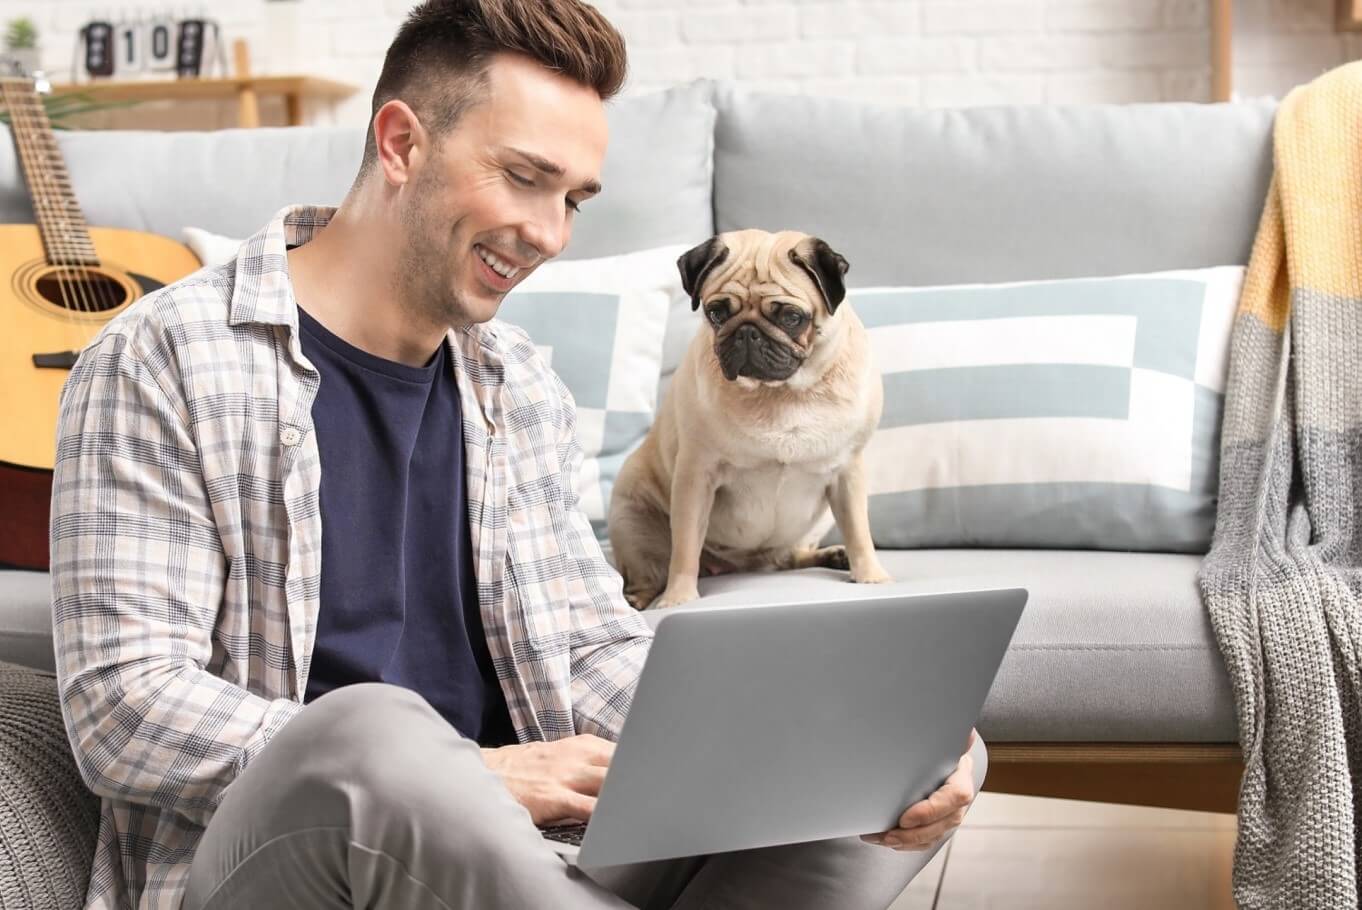 Man at computer with dog